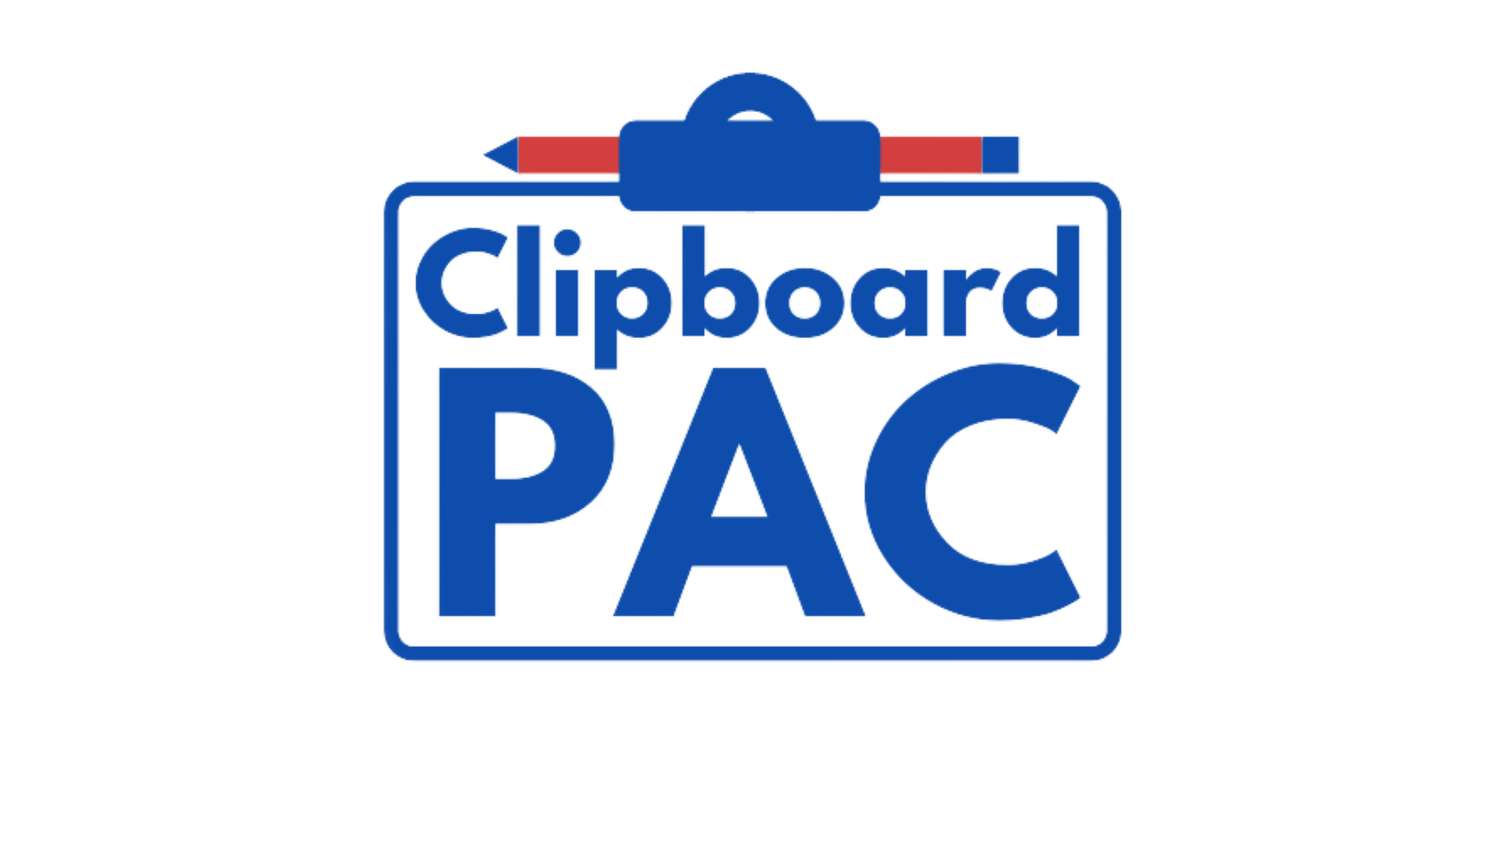 Clipboard PAC